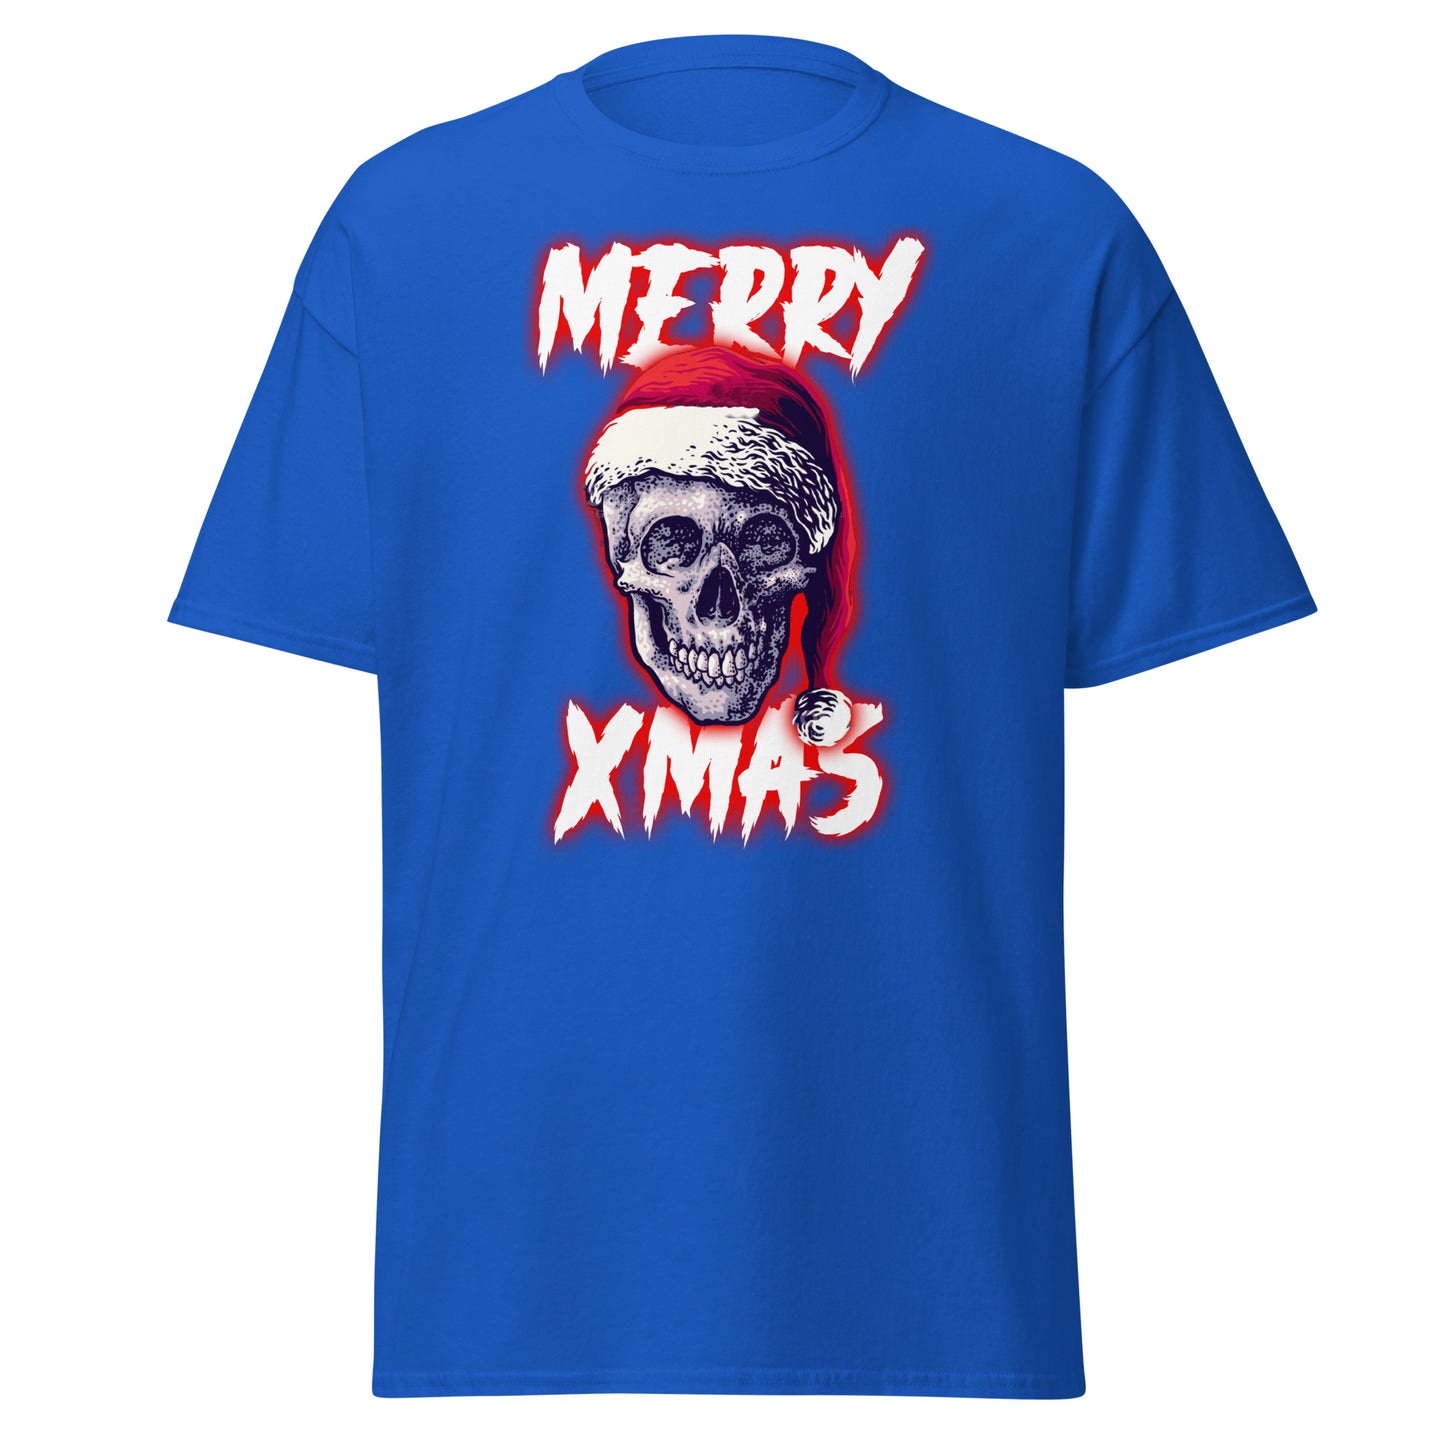 Merry Xmas Skull T-Shirt - A Spooky Yuletide Greeting